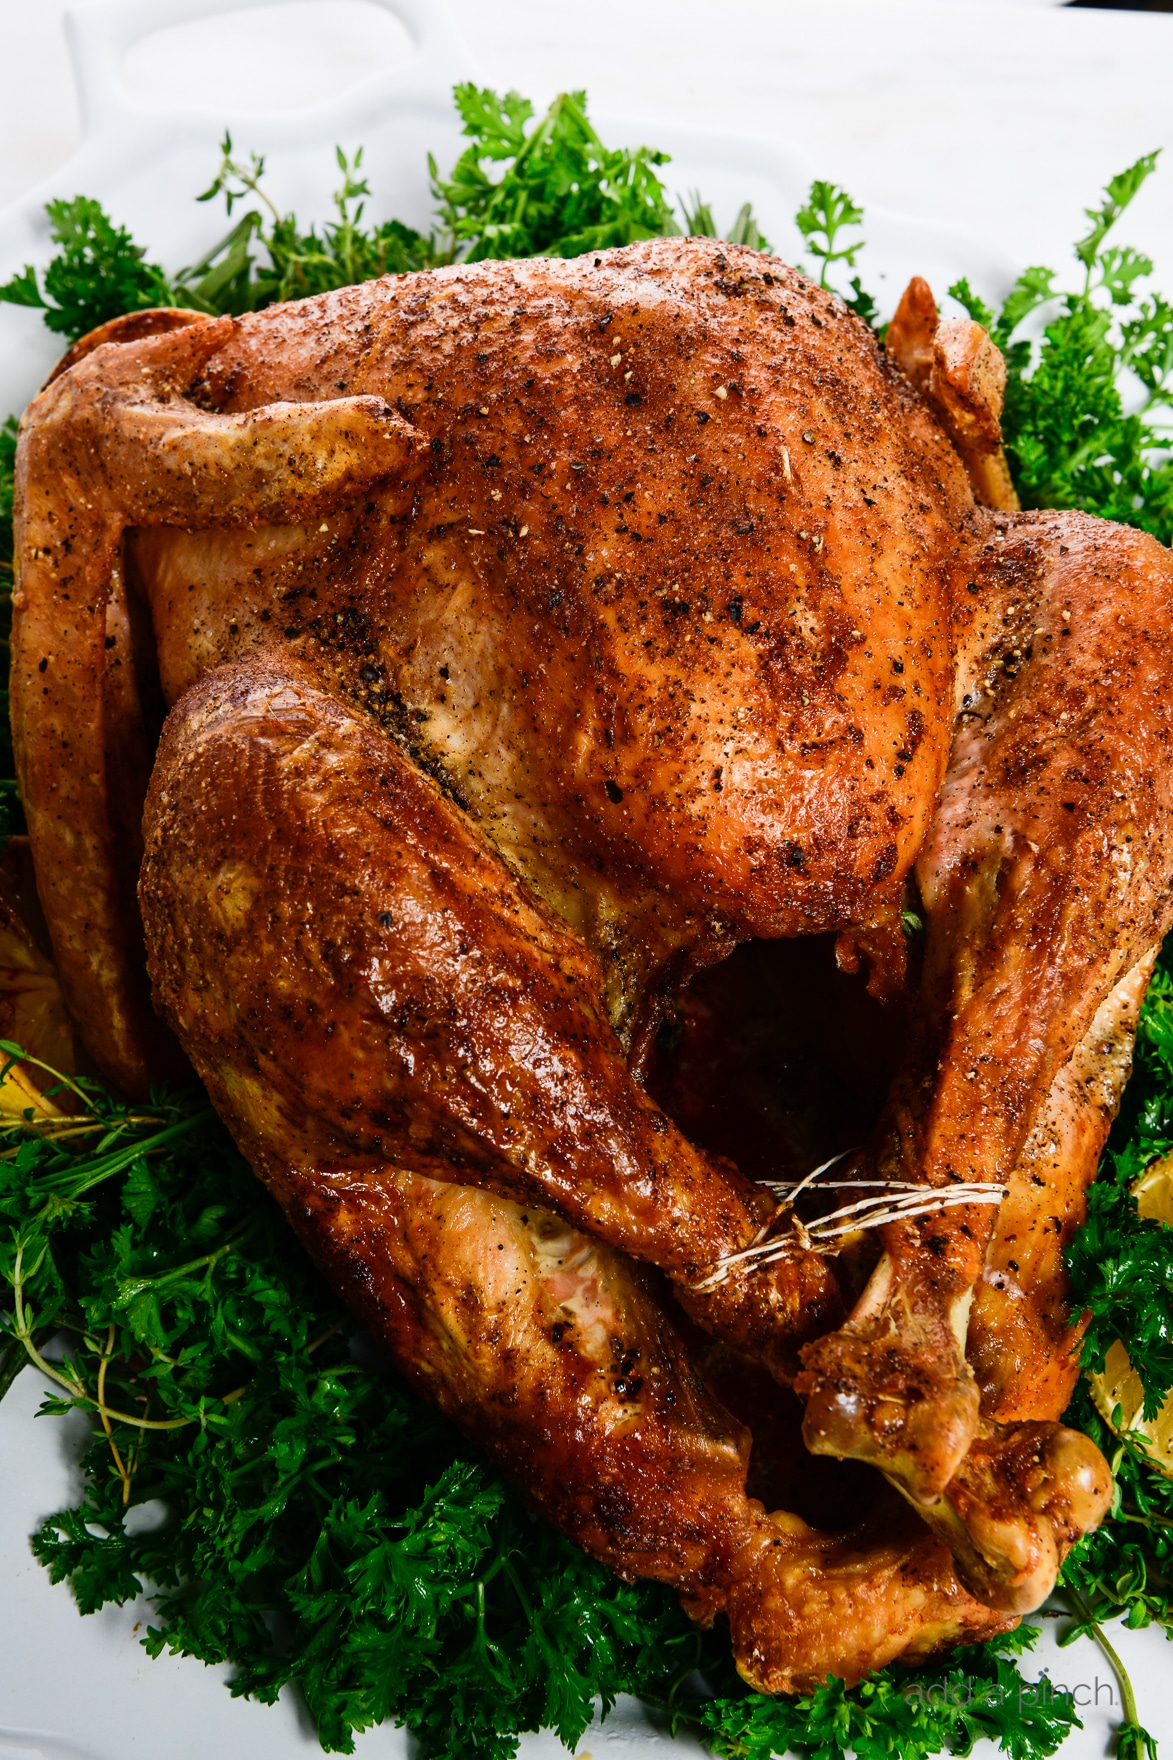 https://addapinch.com/wp-content/uploads/2019/11/roast-turkey-recipe-2823.jpg